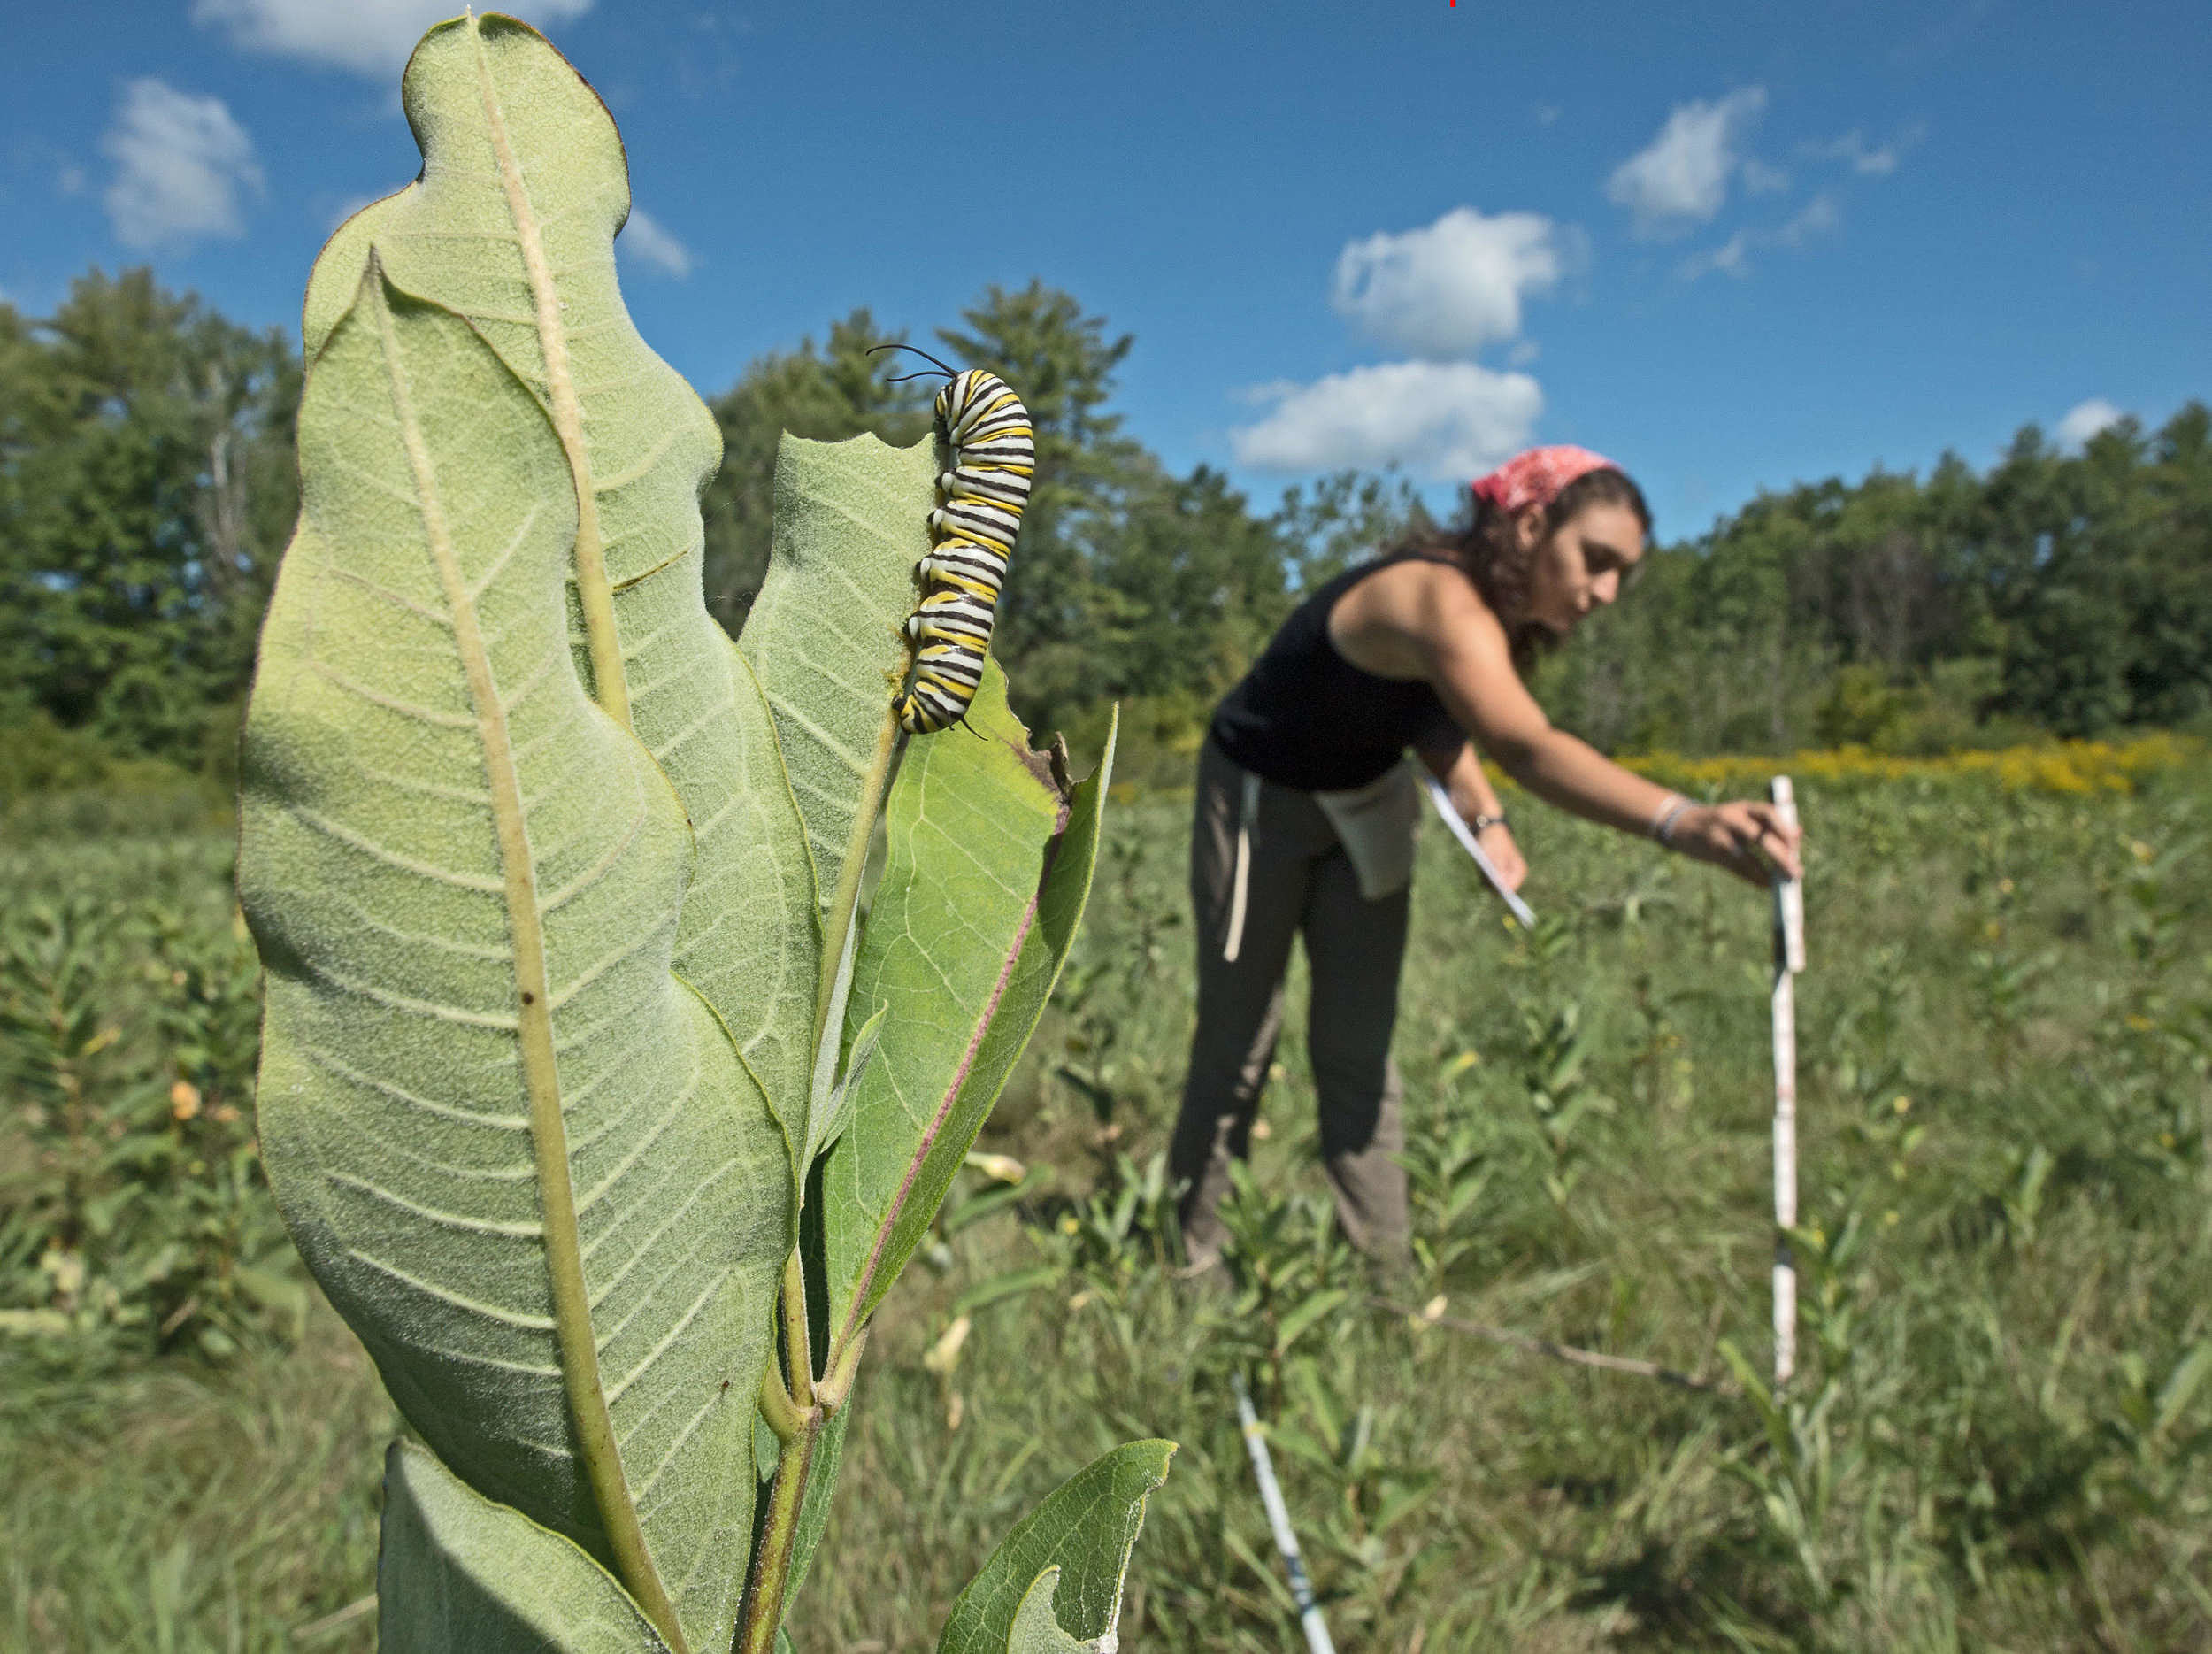 Undergraduate researcher Katie Galletta examines milkweed plants for insect herbivory. (photo © Mark Wilson)